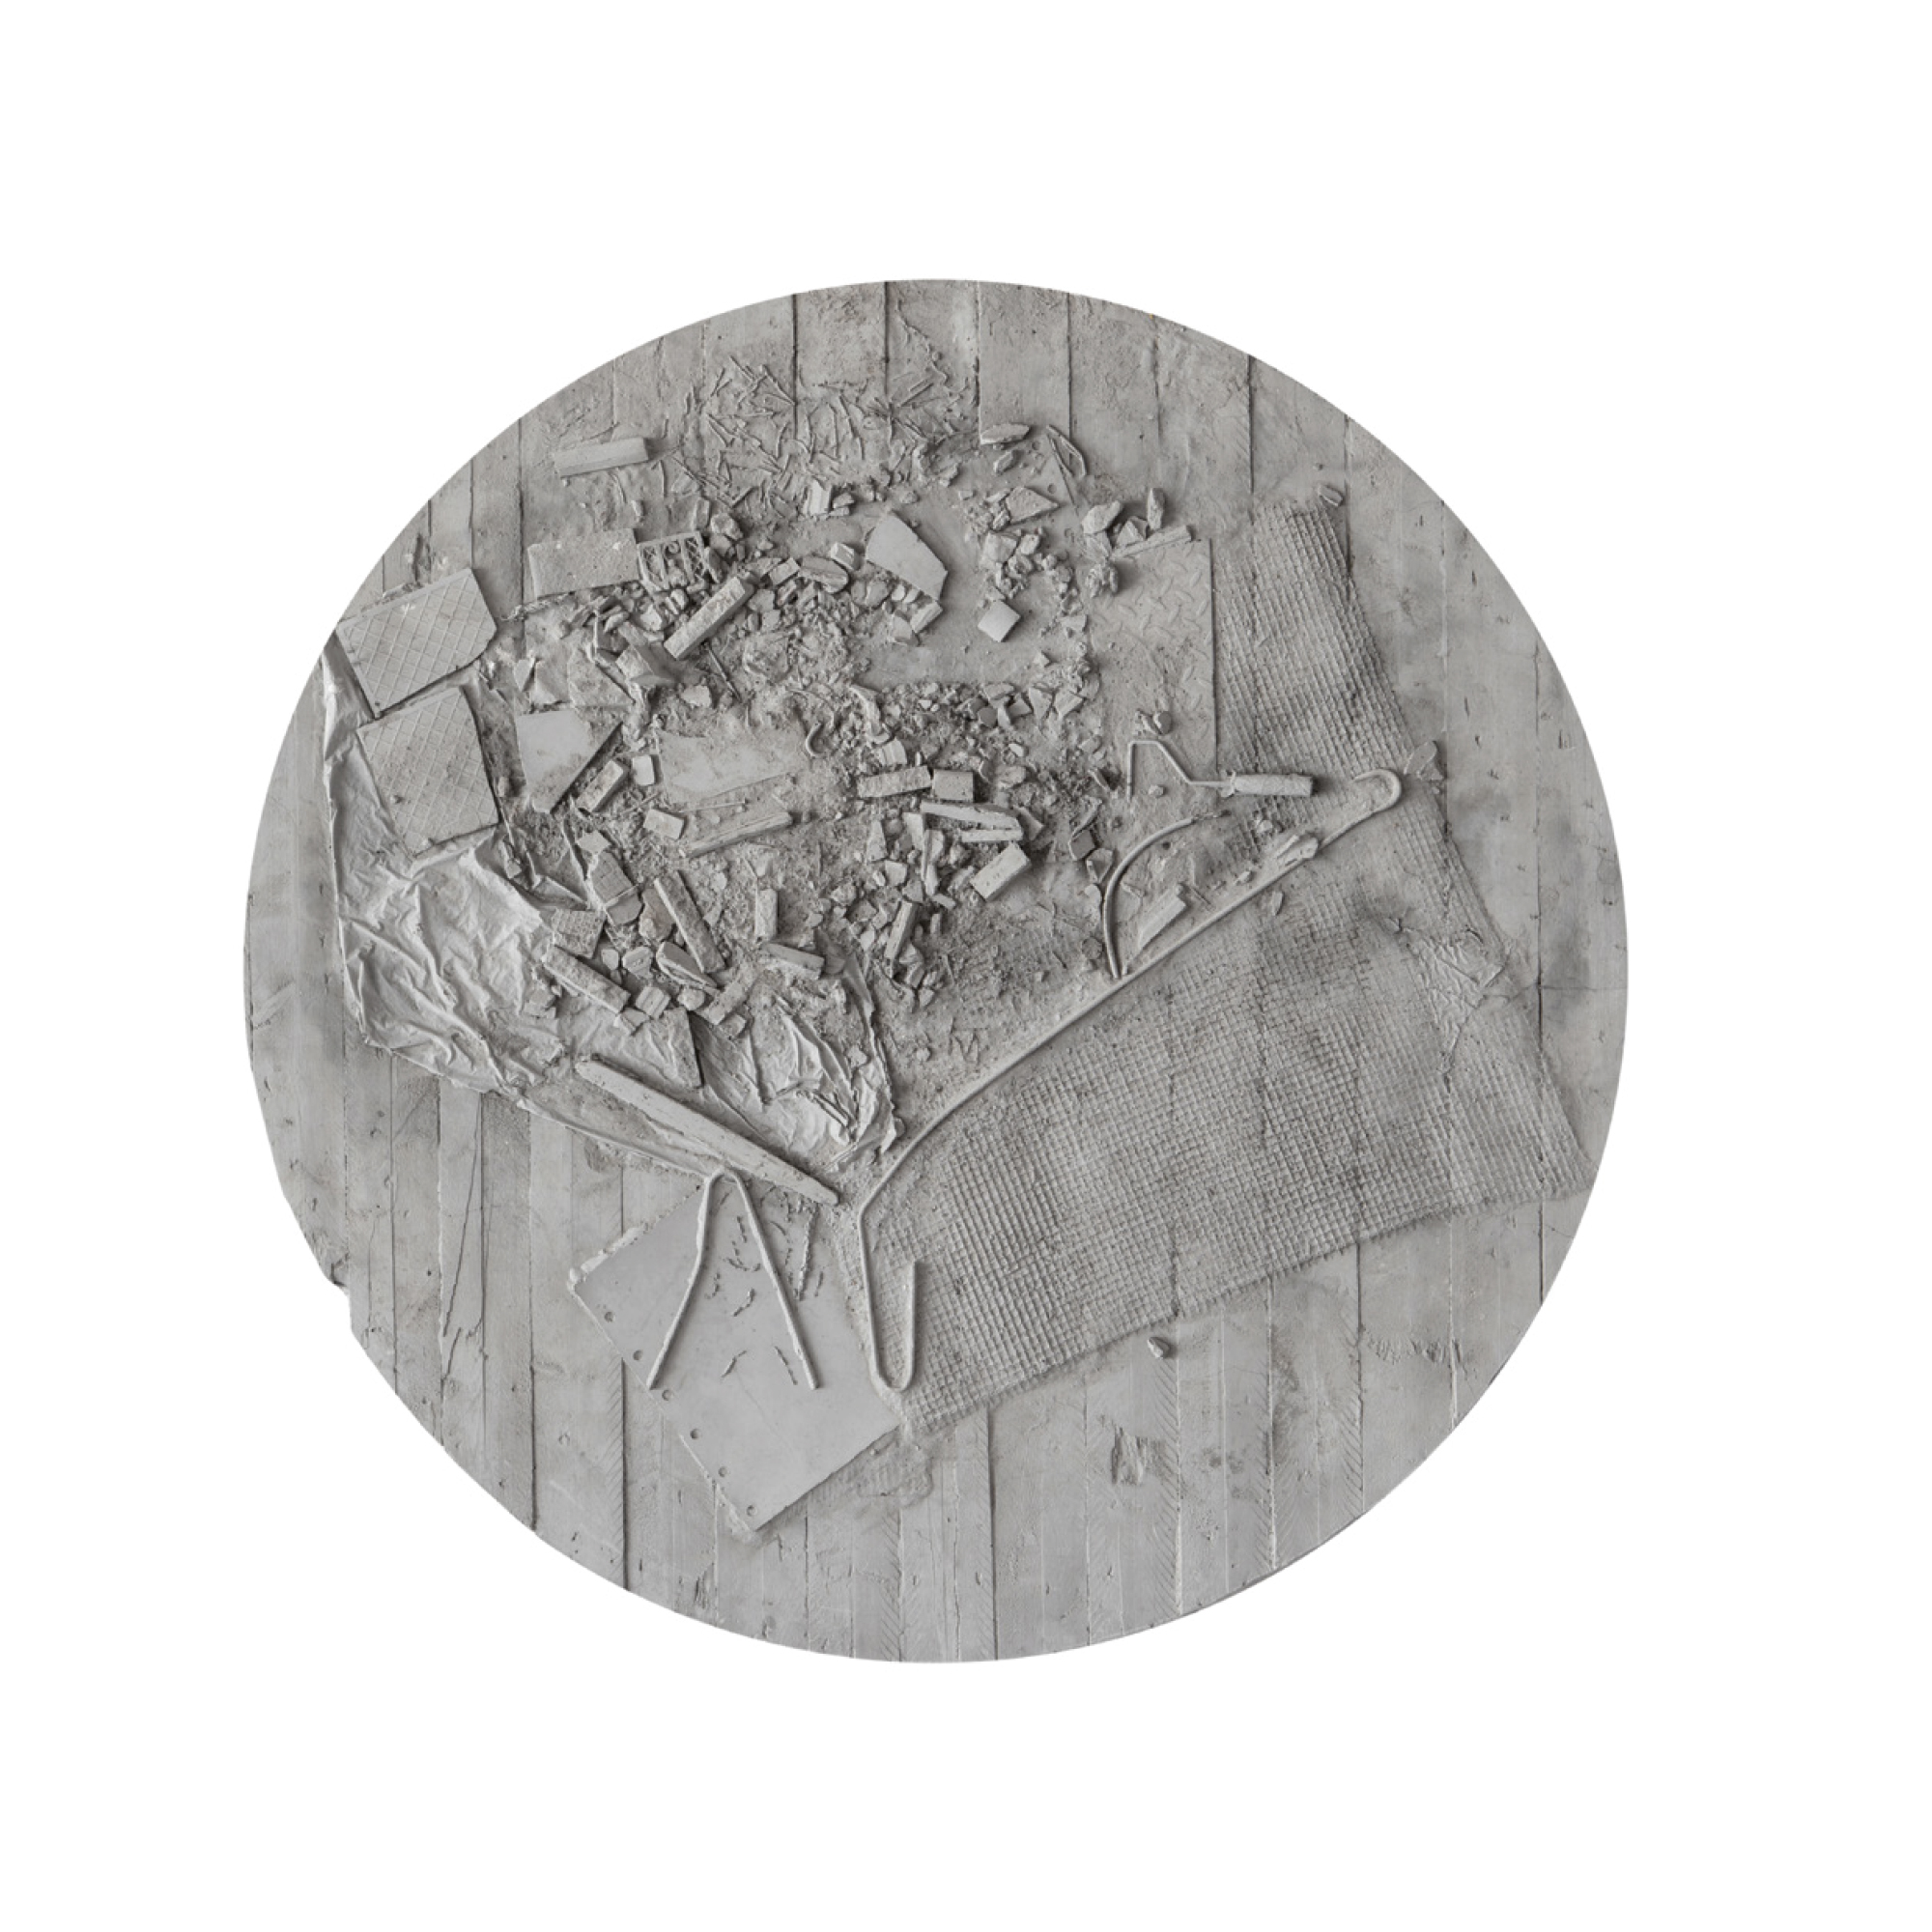 VESTIGES, 2017 Bas-relief en béton Edition 1/3 + 2 EA Diamètre 200 cm